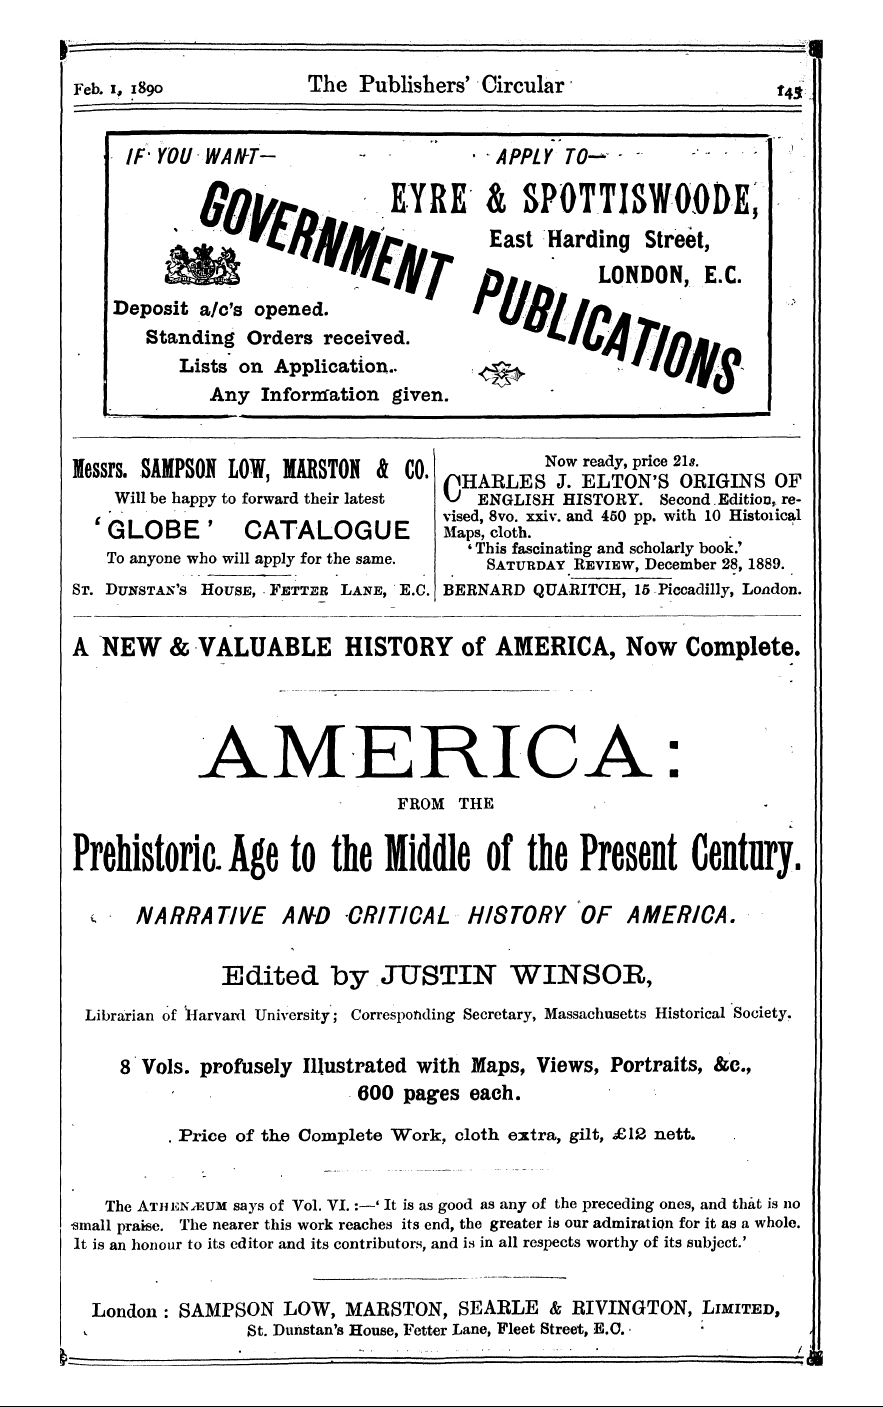 Publishers’ Circular (1880-1890): jS F Y, 1st edition - Ad04302